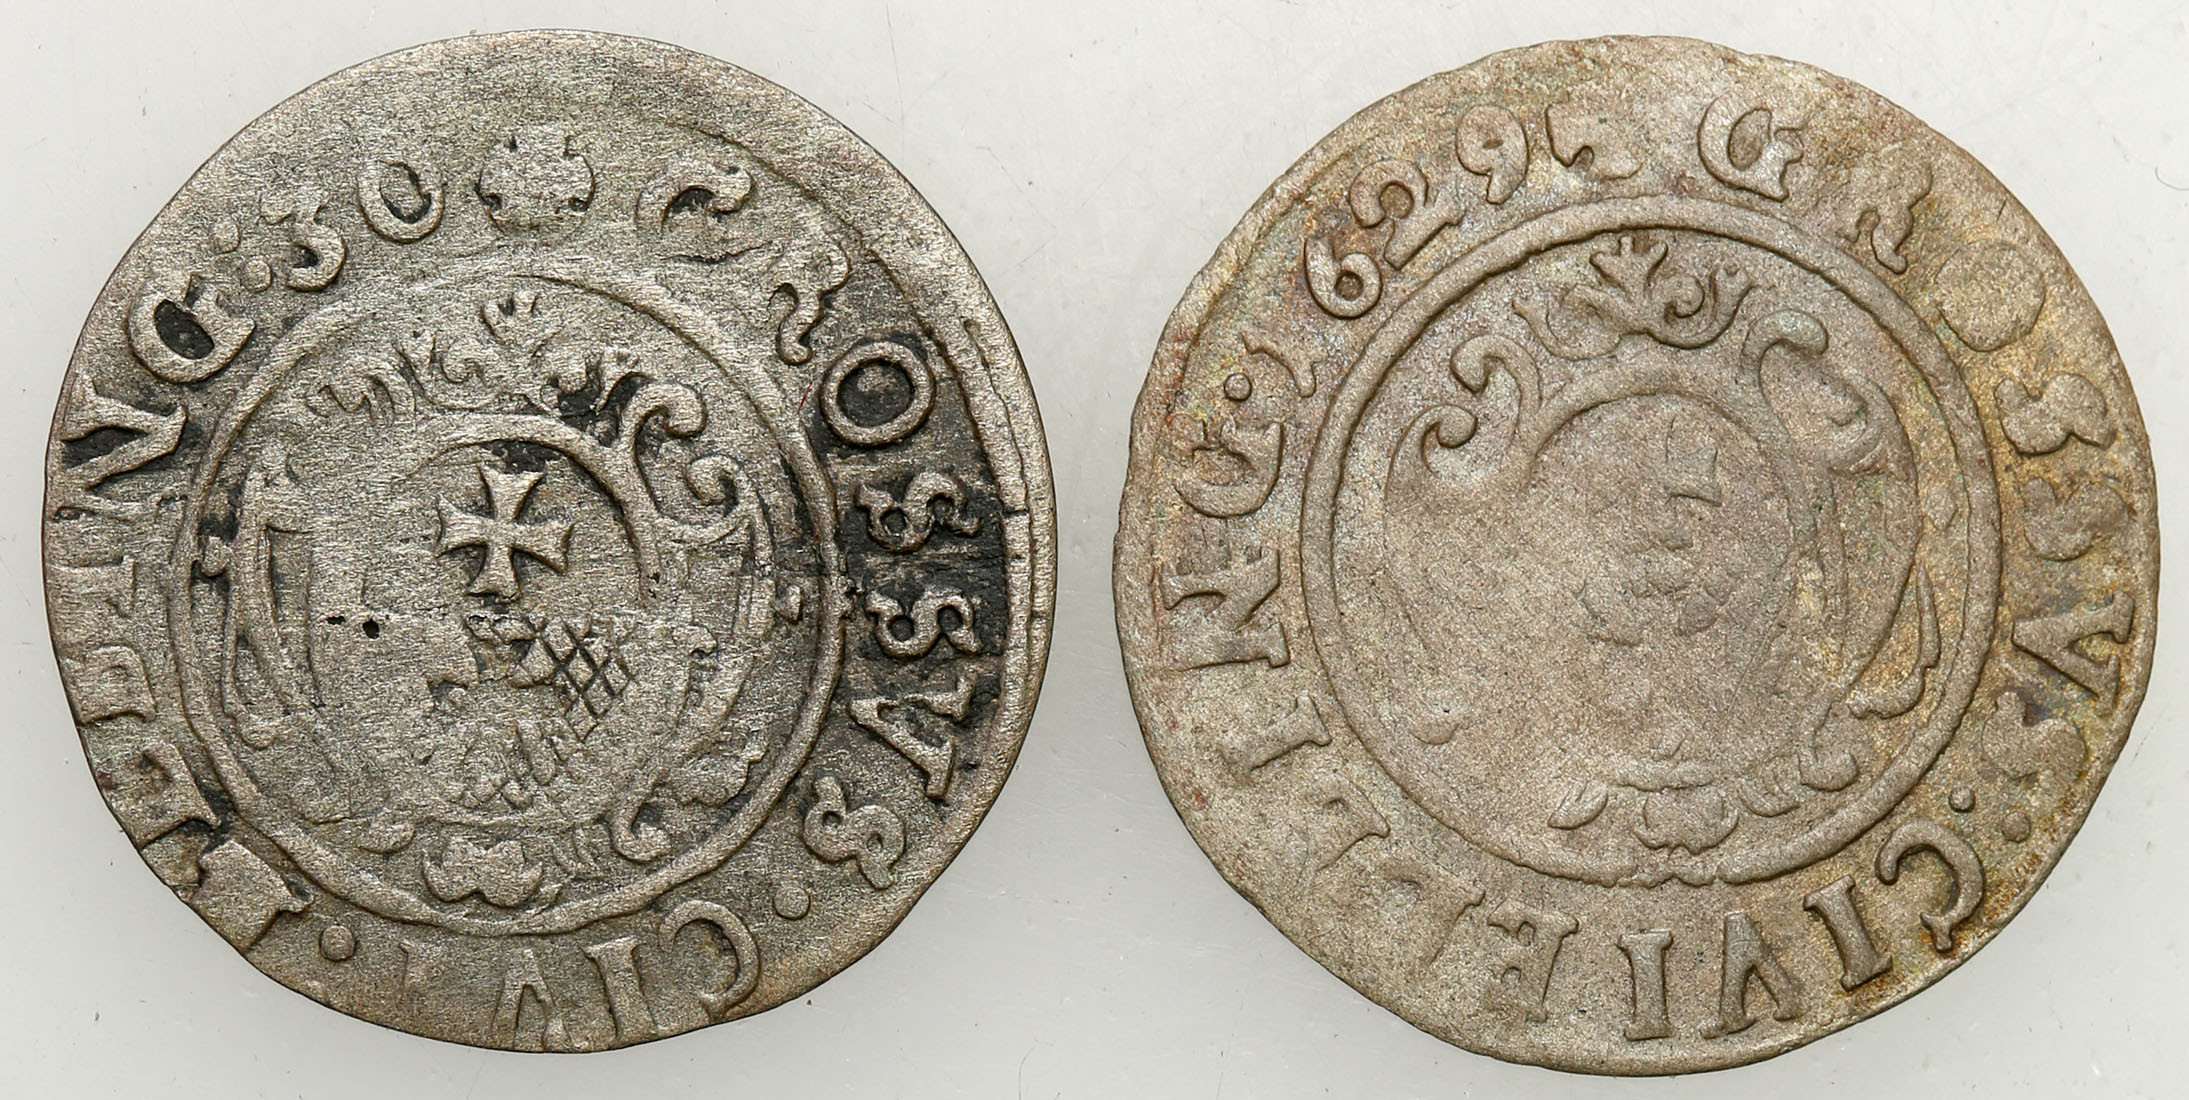 Gustaw II Adolf - okupacja szwedzka. Grosz 1629, 1630 Elbląg, zestaw 2 monet